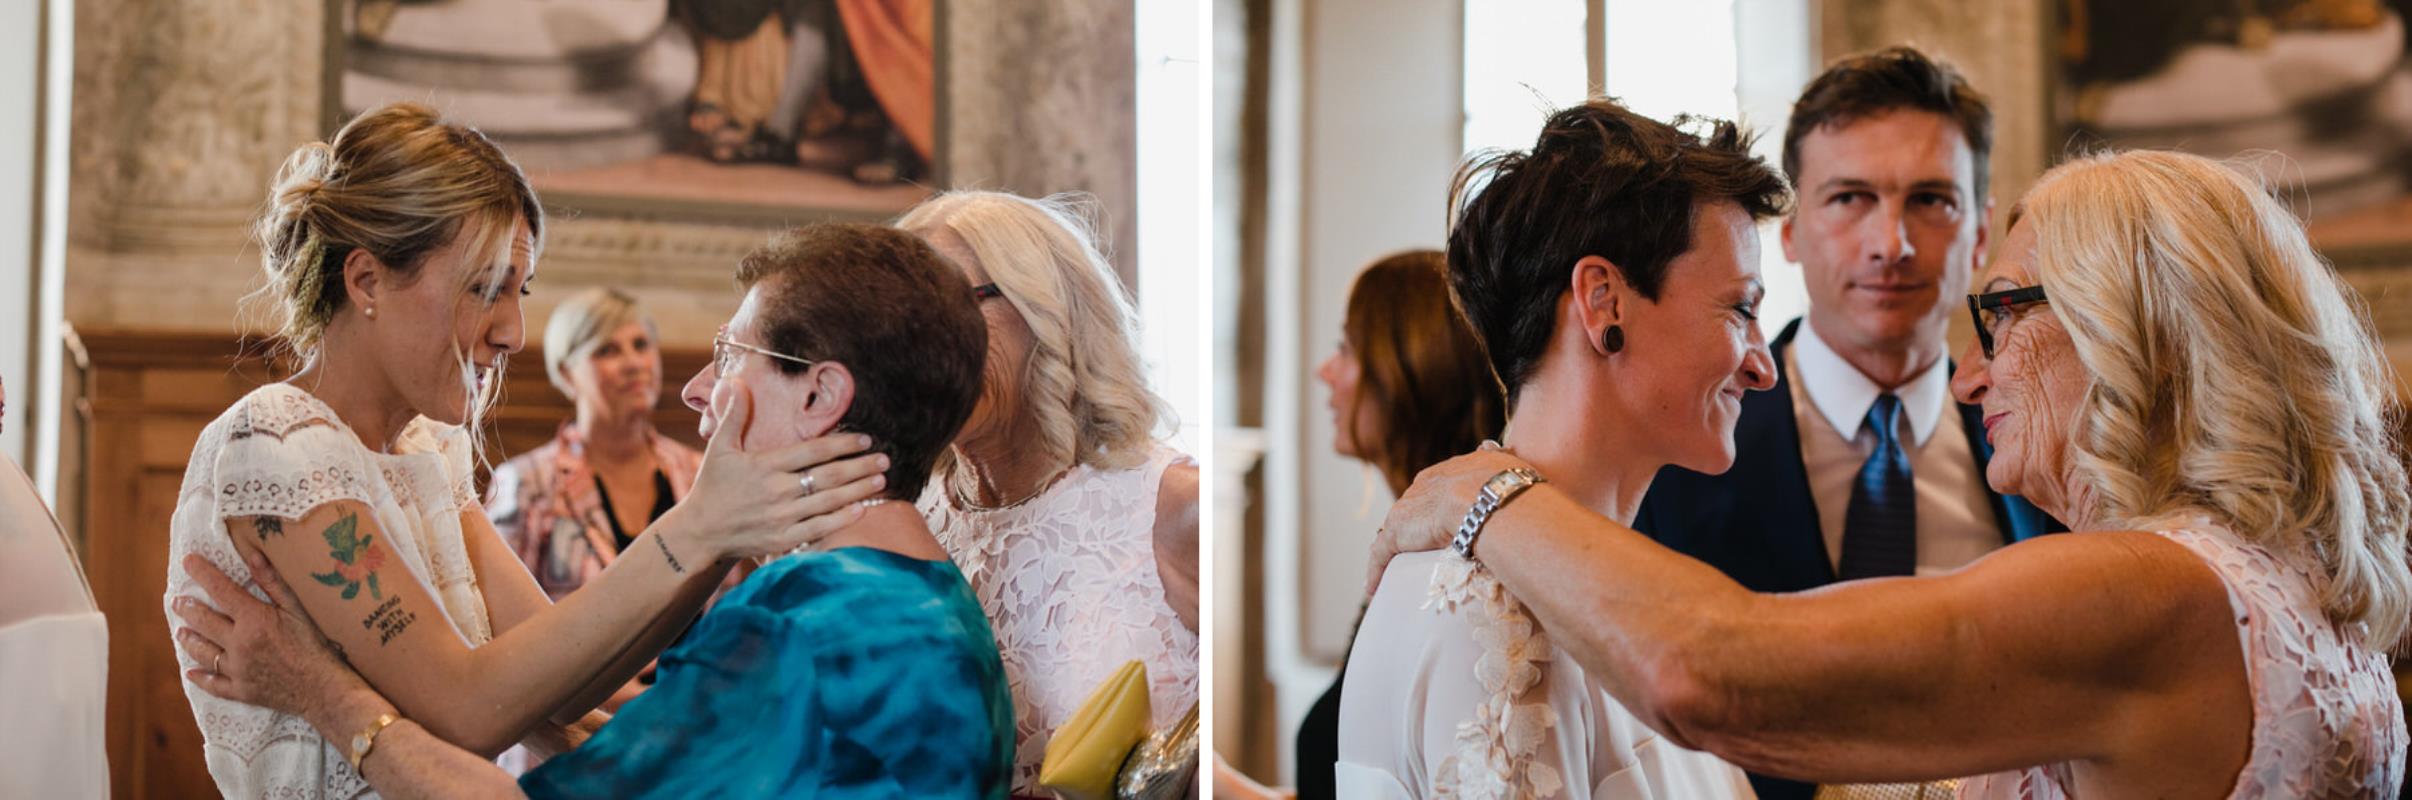 samesex wedding photographer | Laura Stramacchia | Wedding Photography